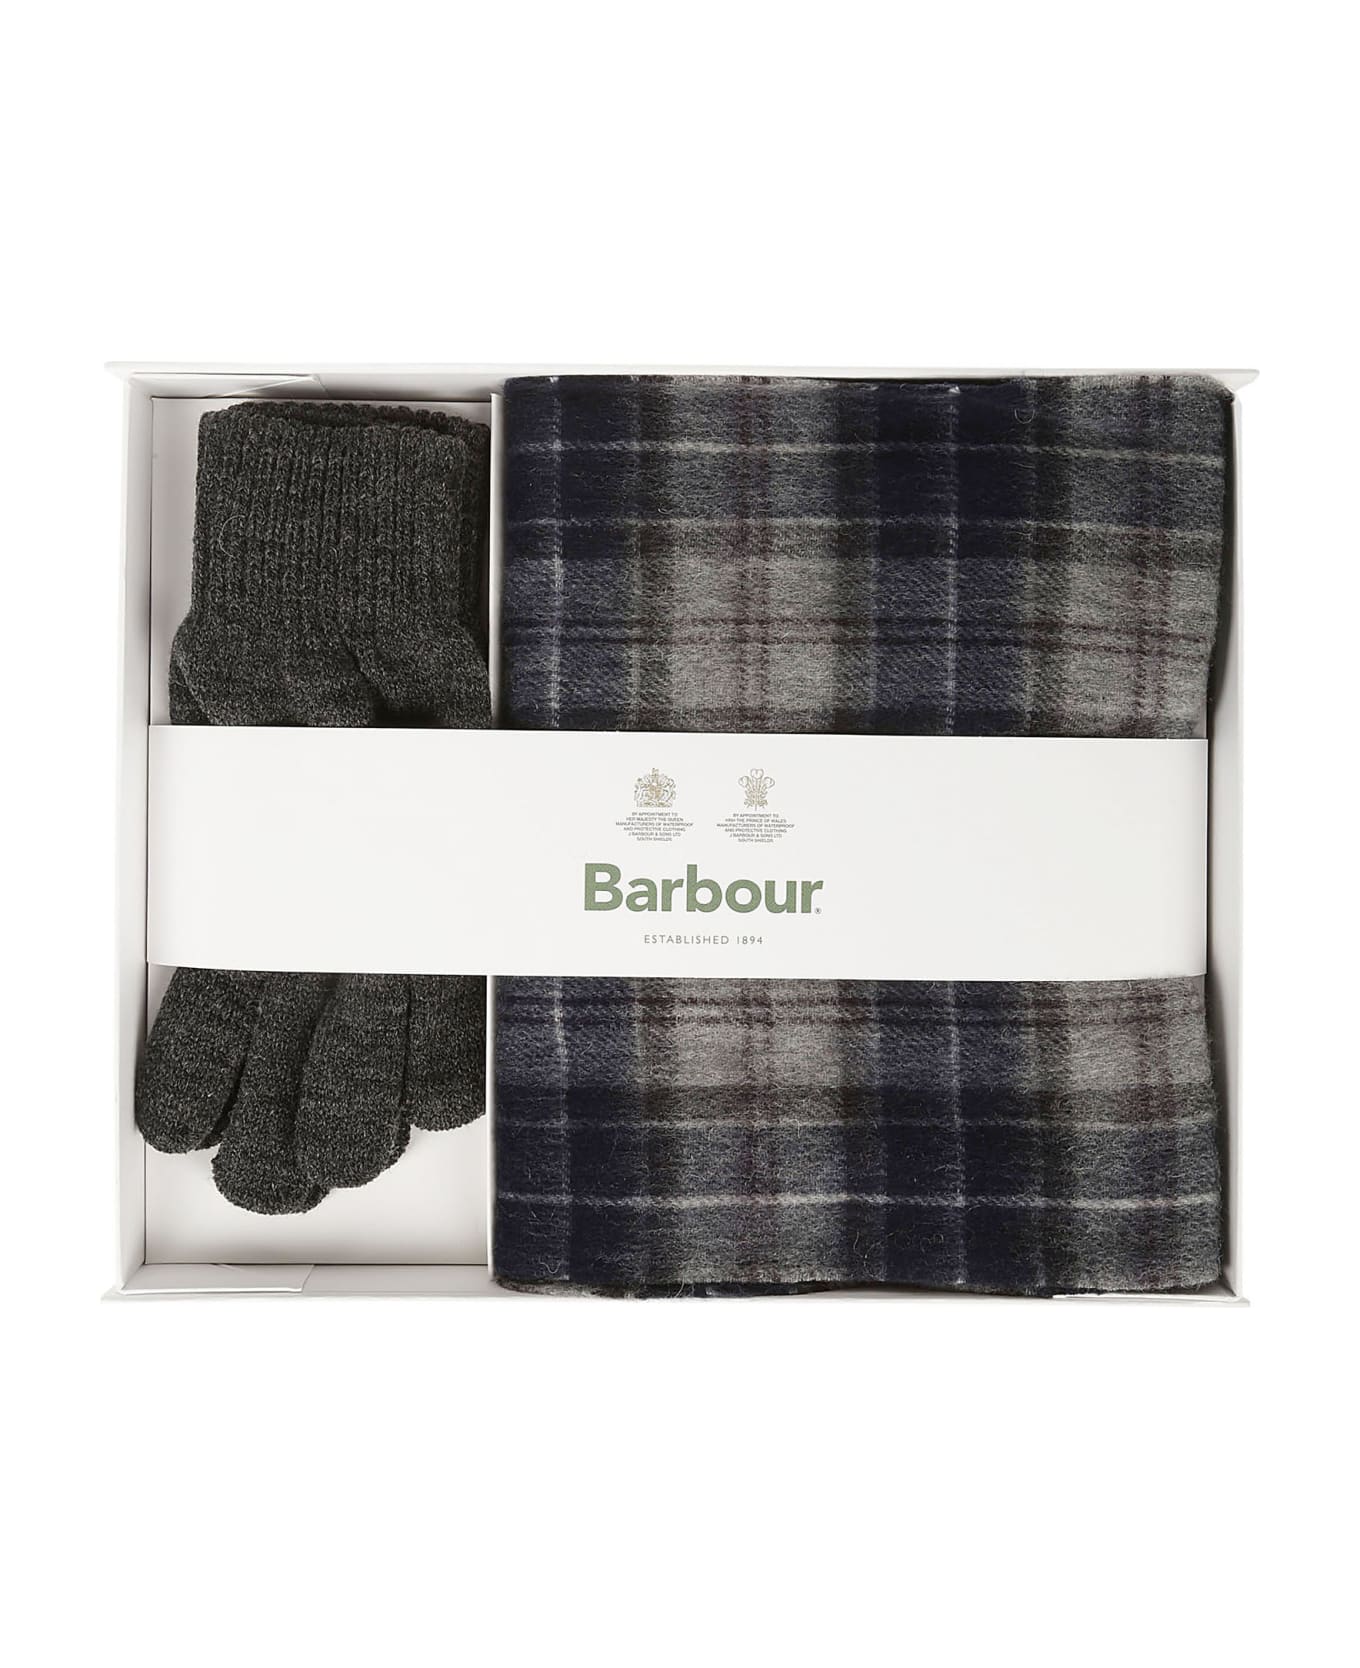 Barbour Tartan Scarf Glove Gift Set - Black Slate Tartan